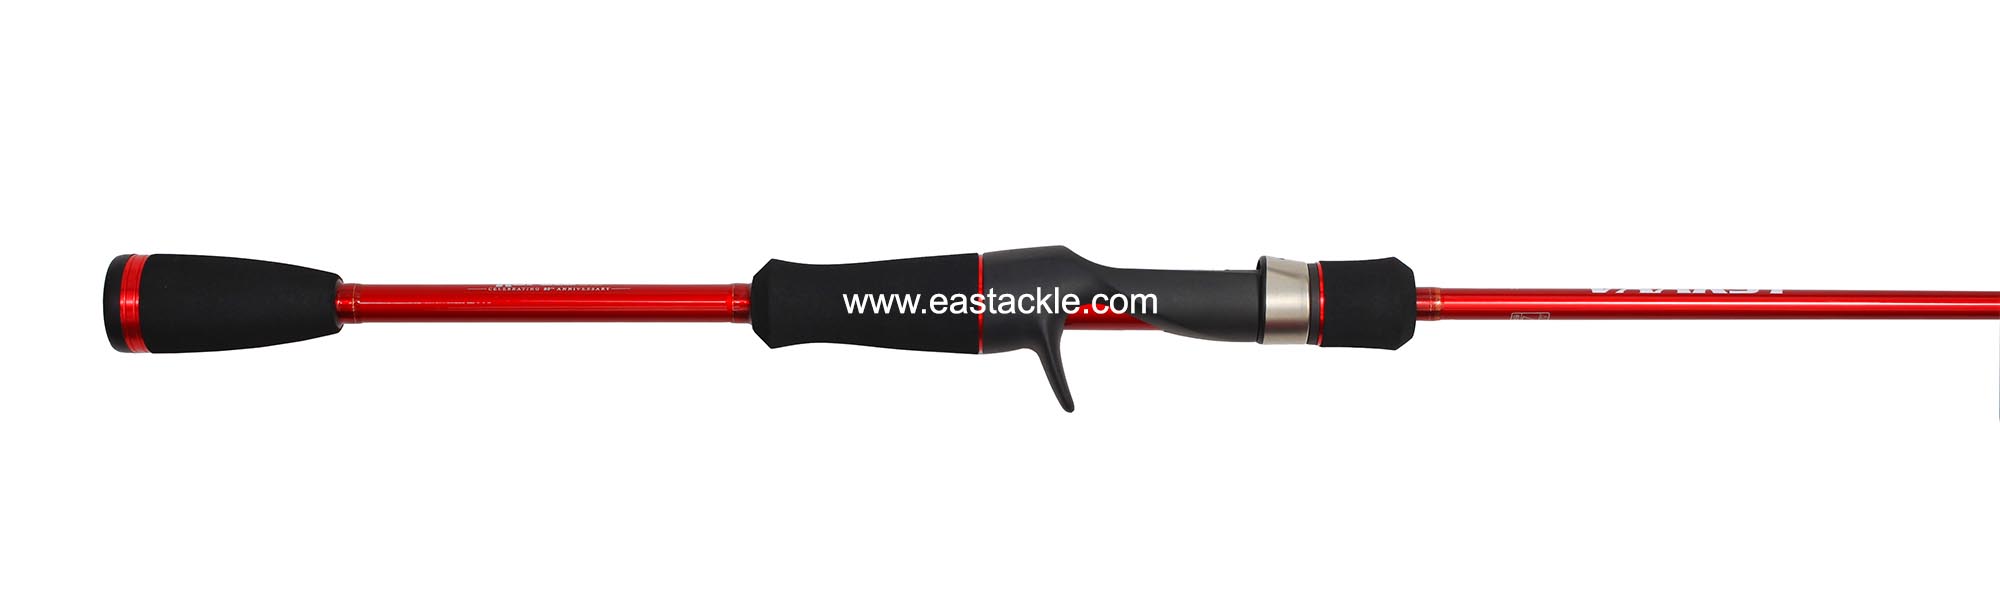 Rapala - Vaaksy - VAC662MH - Baitcasting Rod - Handle Section - Side View | Eastackle